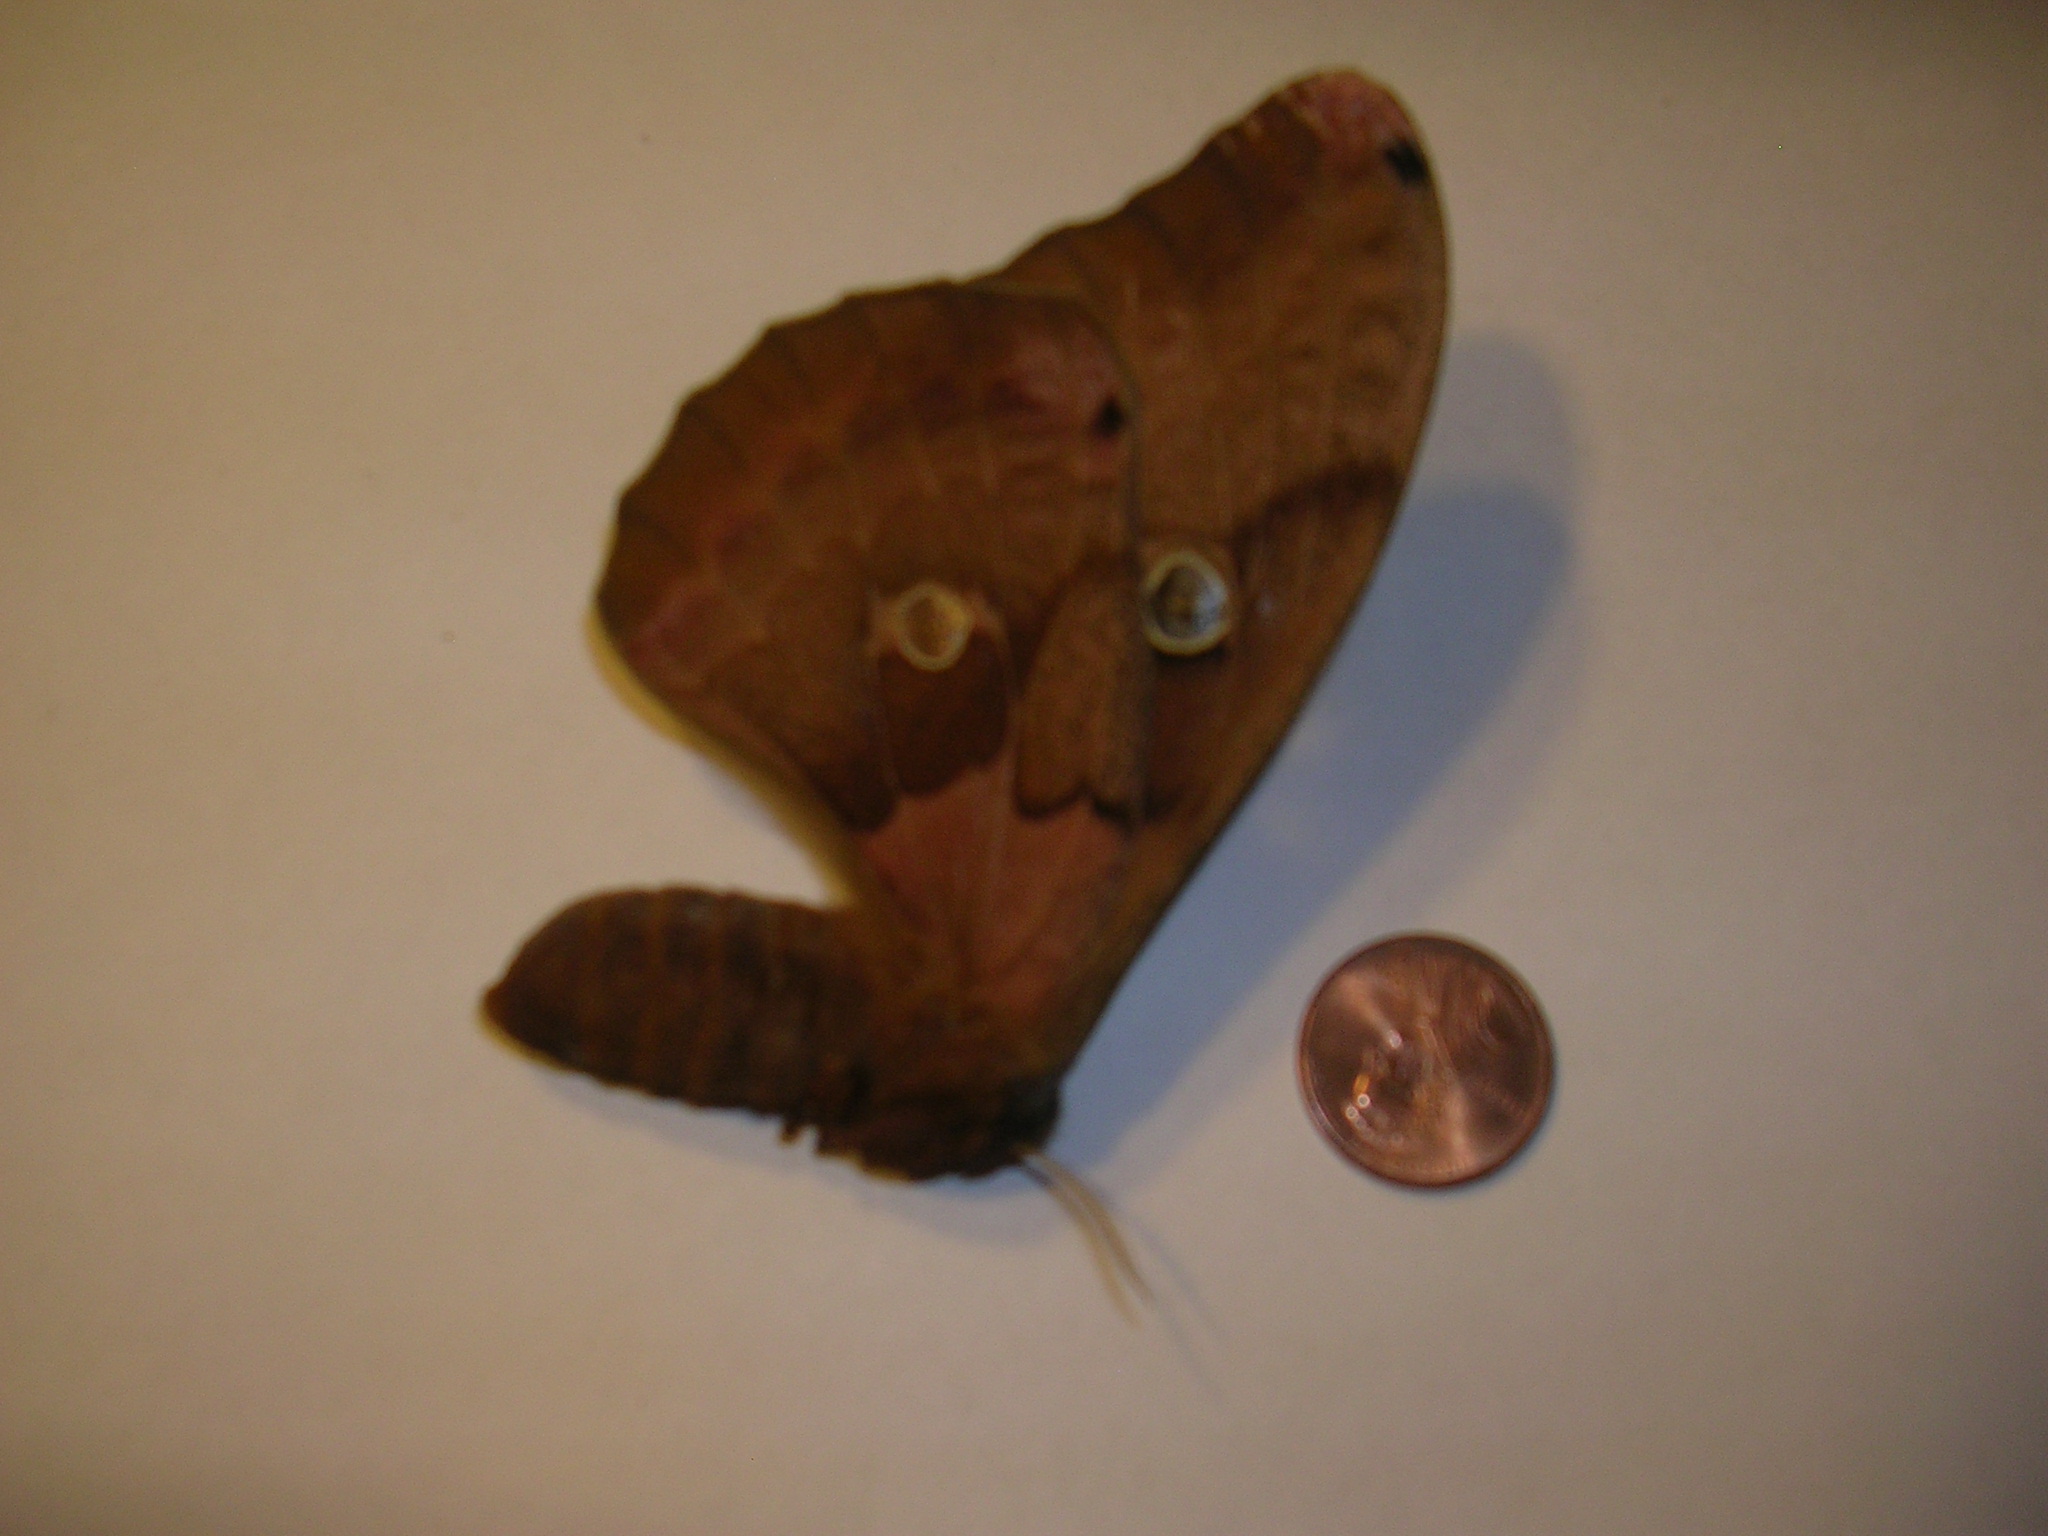 Large Moth